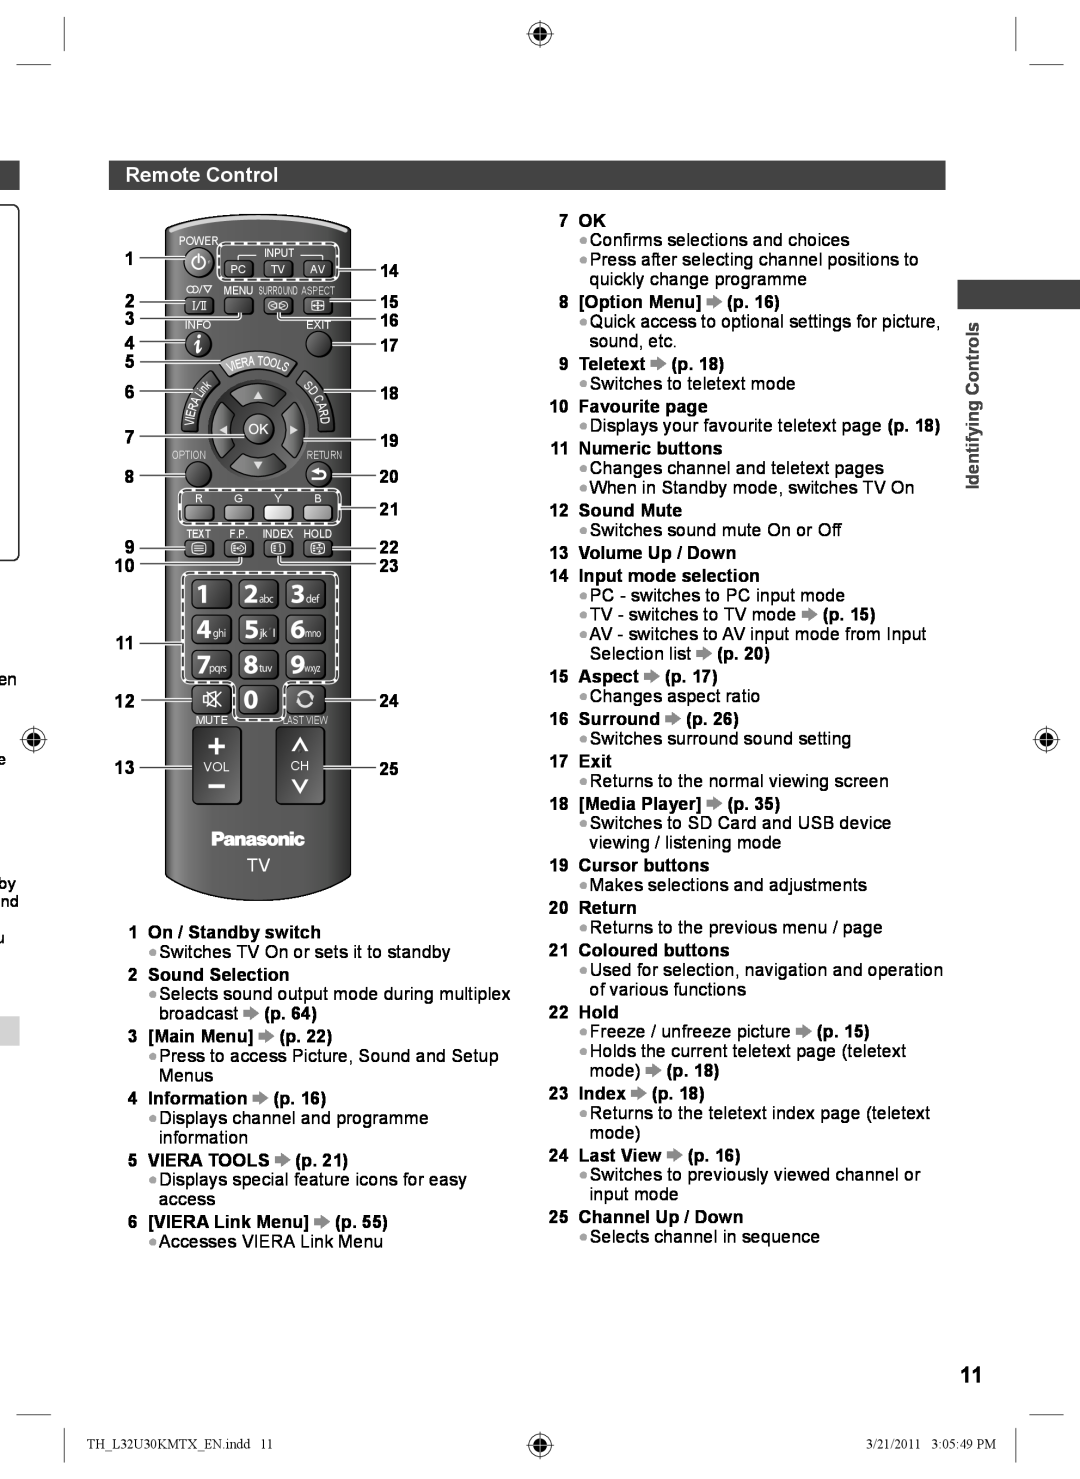 Panasonic TH-L32U30X Remote Control, 1 On / Standby switch, Sound Selection, broadcast, Main Menu, Information p, 7 OK 